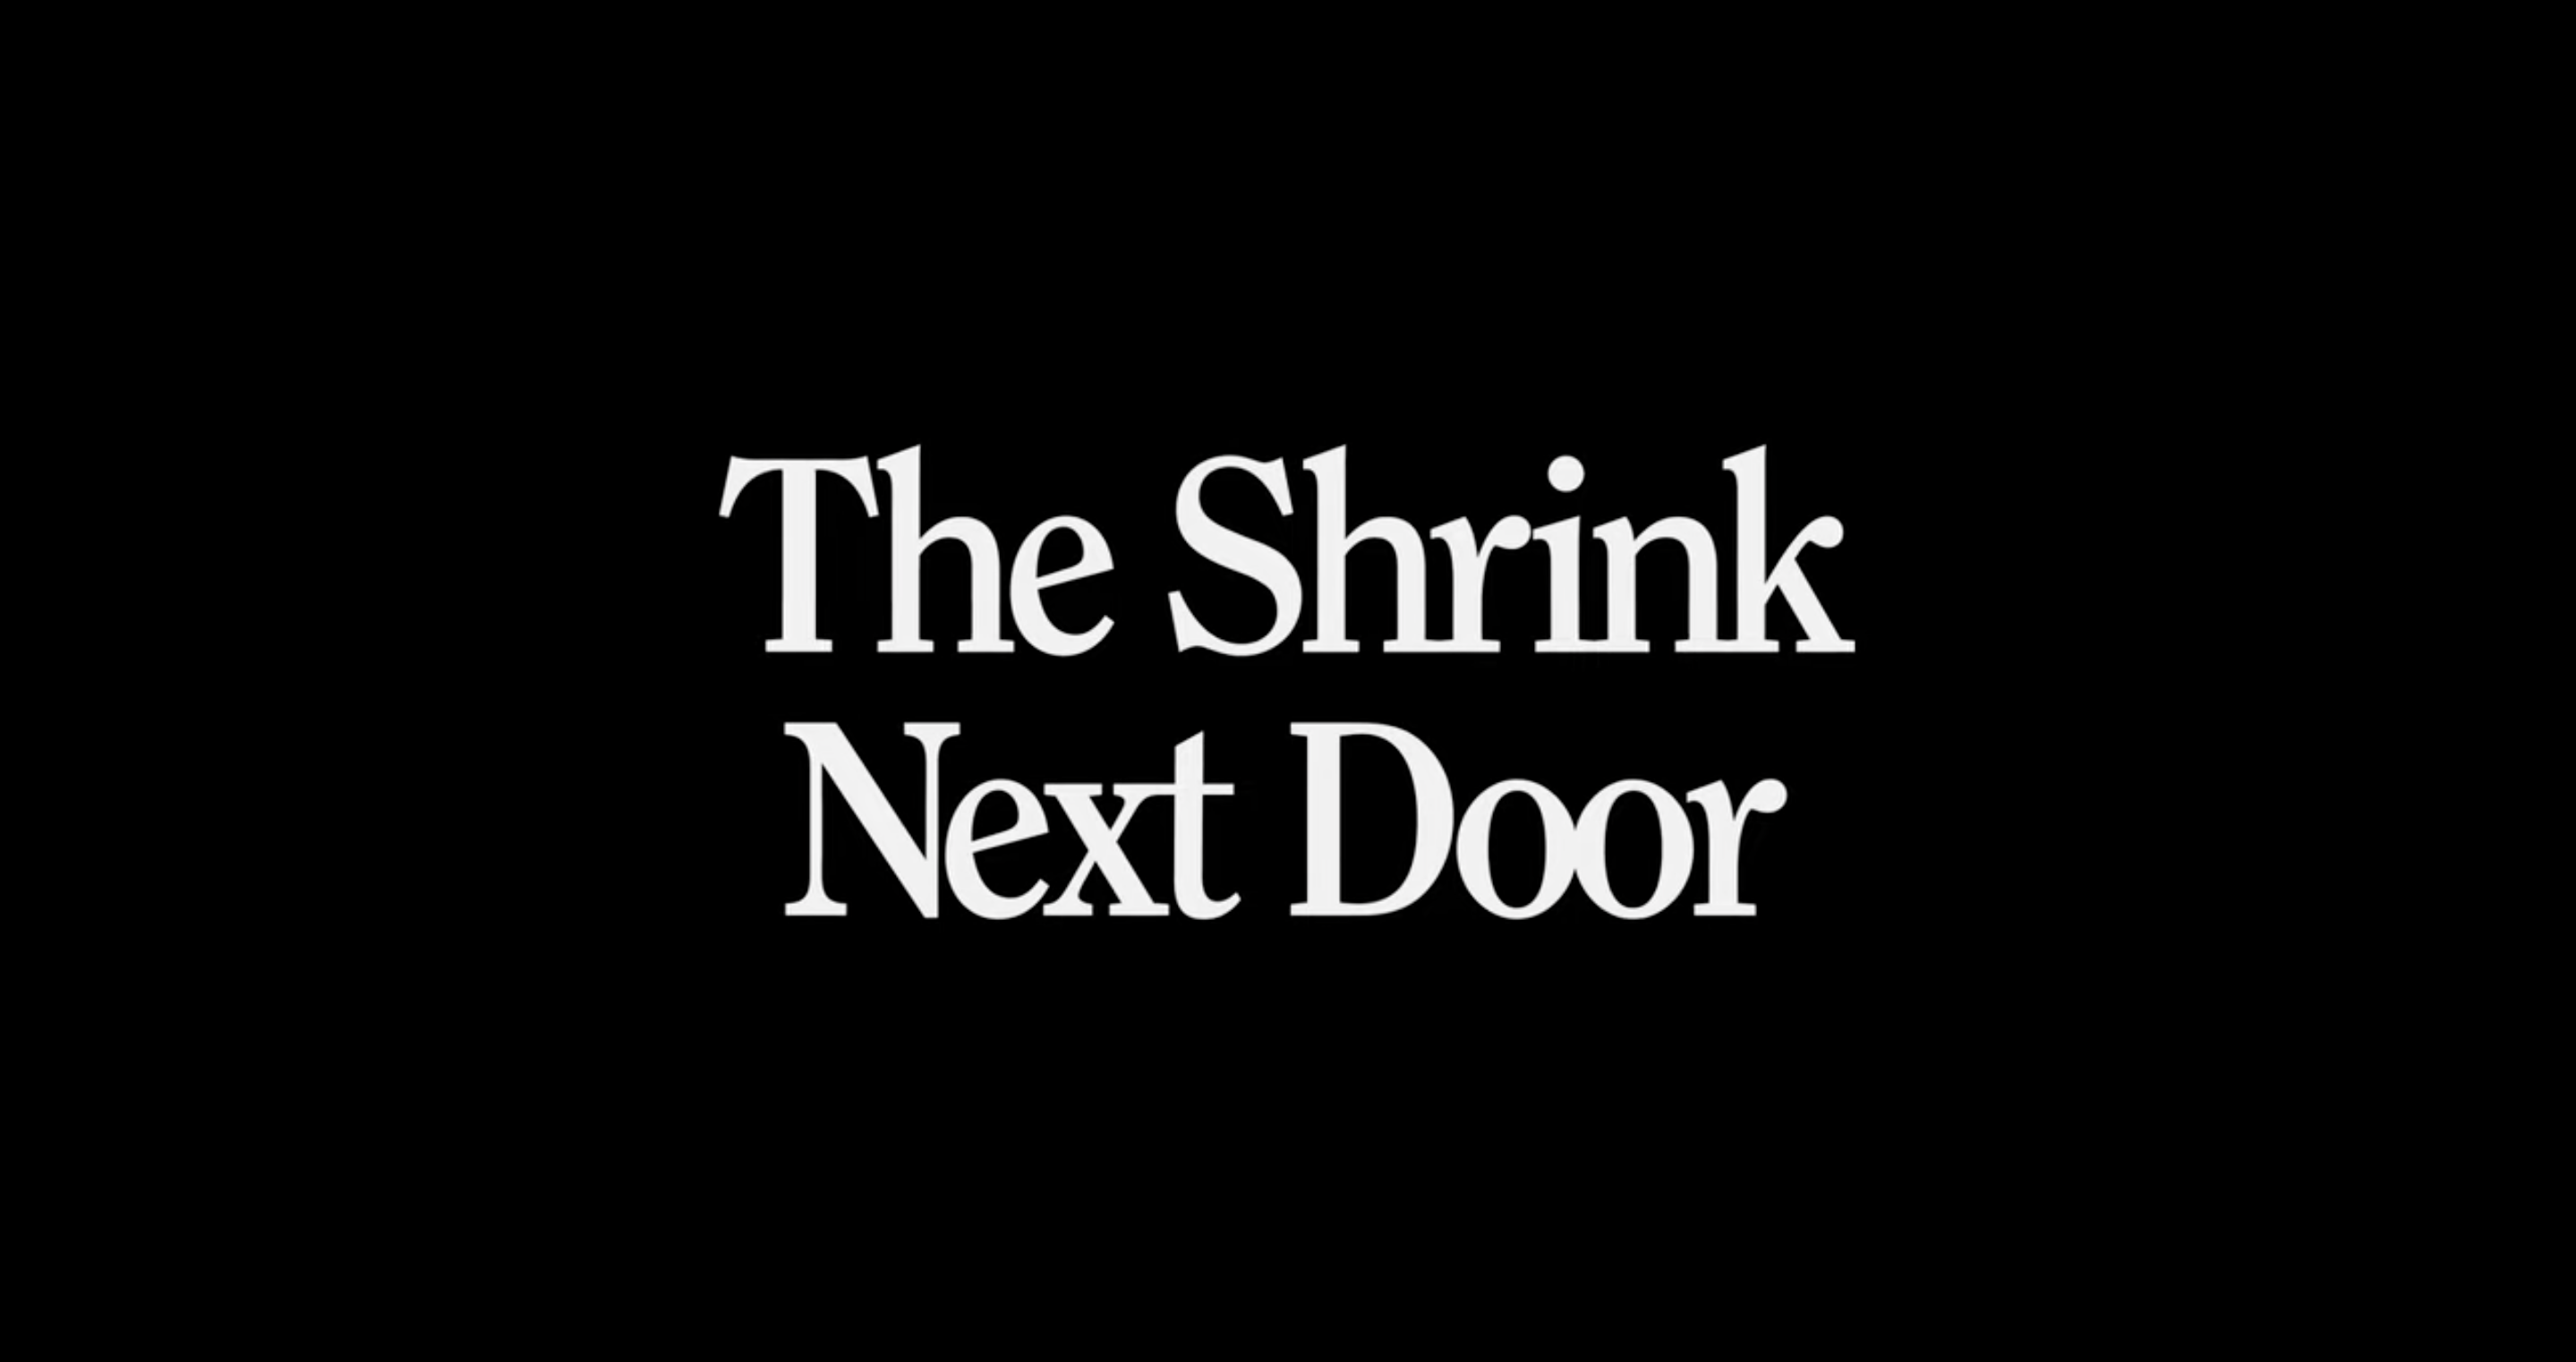 Apple TV+ lanza el teaser de 'The Shrink Next Door" con Will Ferrell y Paul Rudd